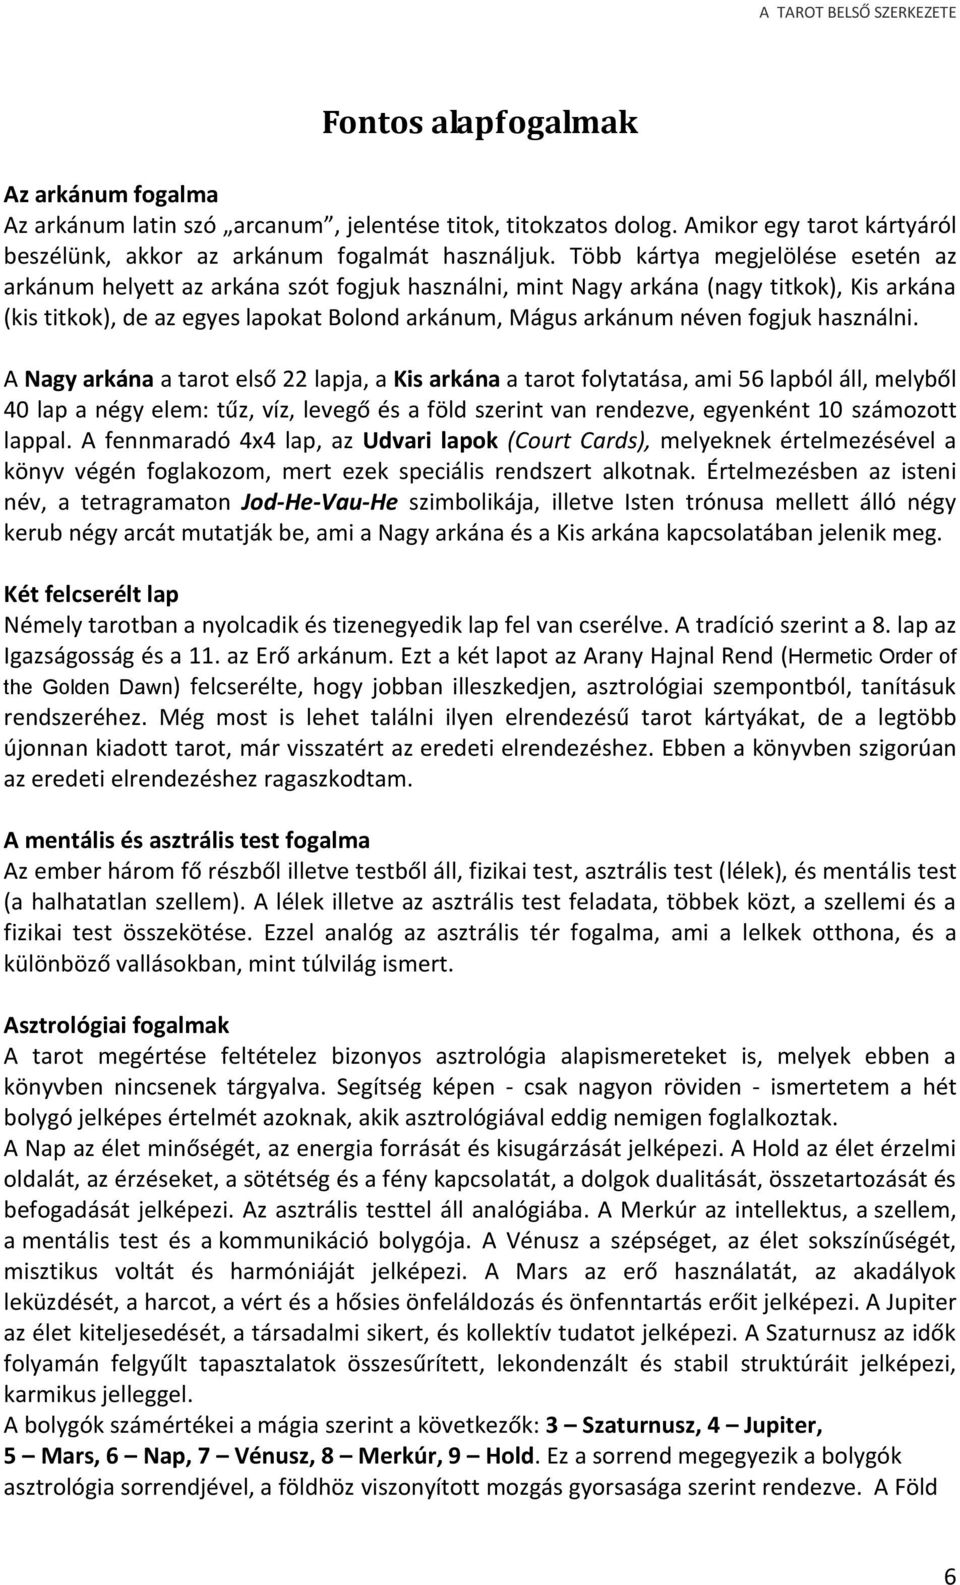 A TAROT BELSŐ SZERKEZETE - PDF Free Download